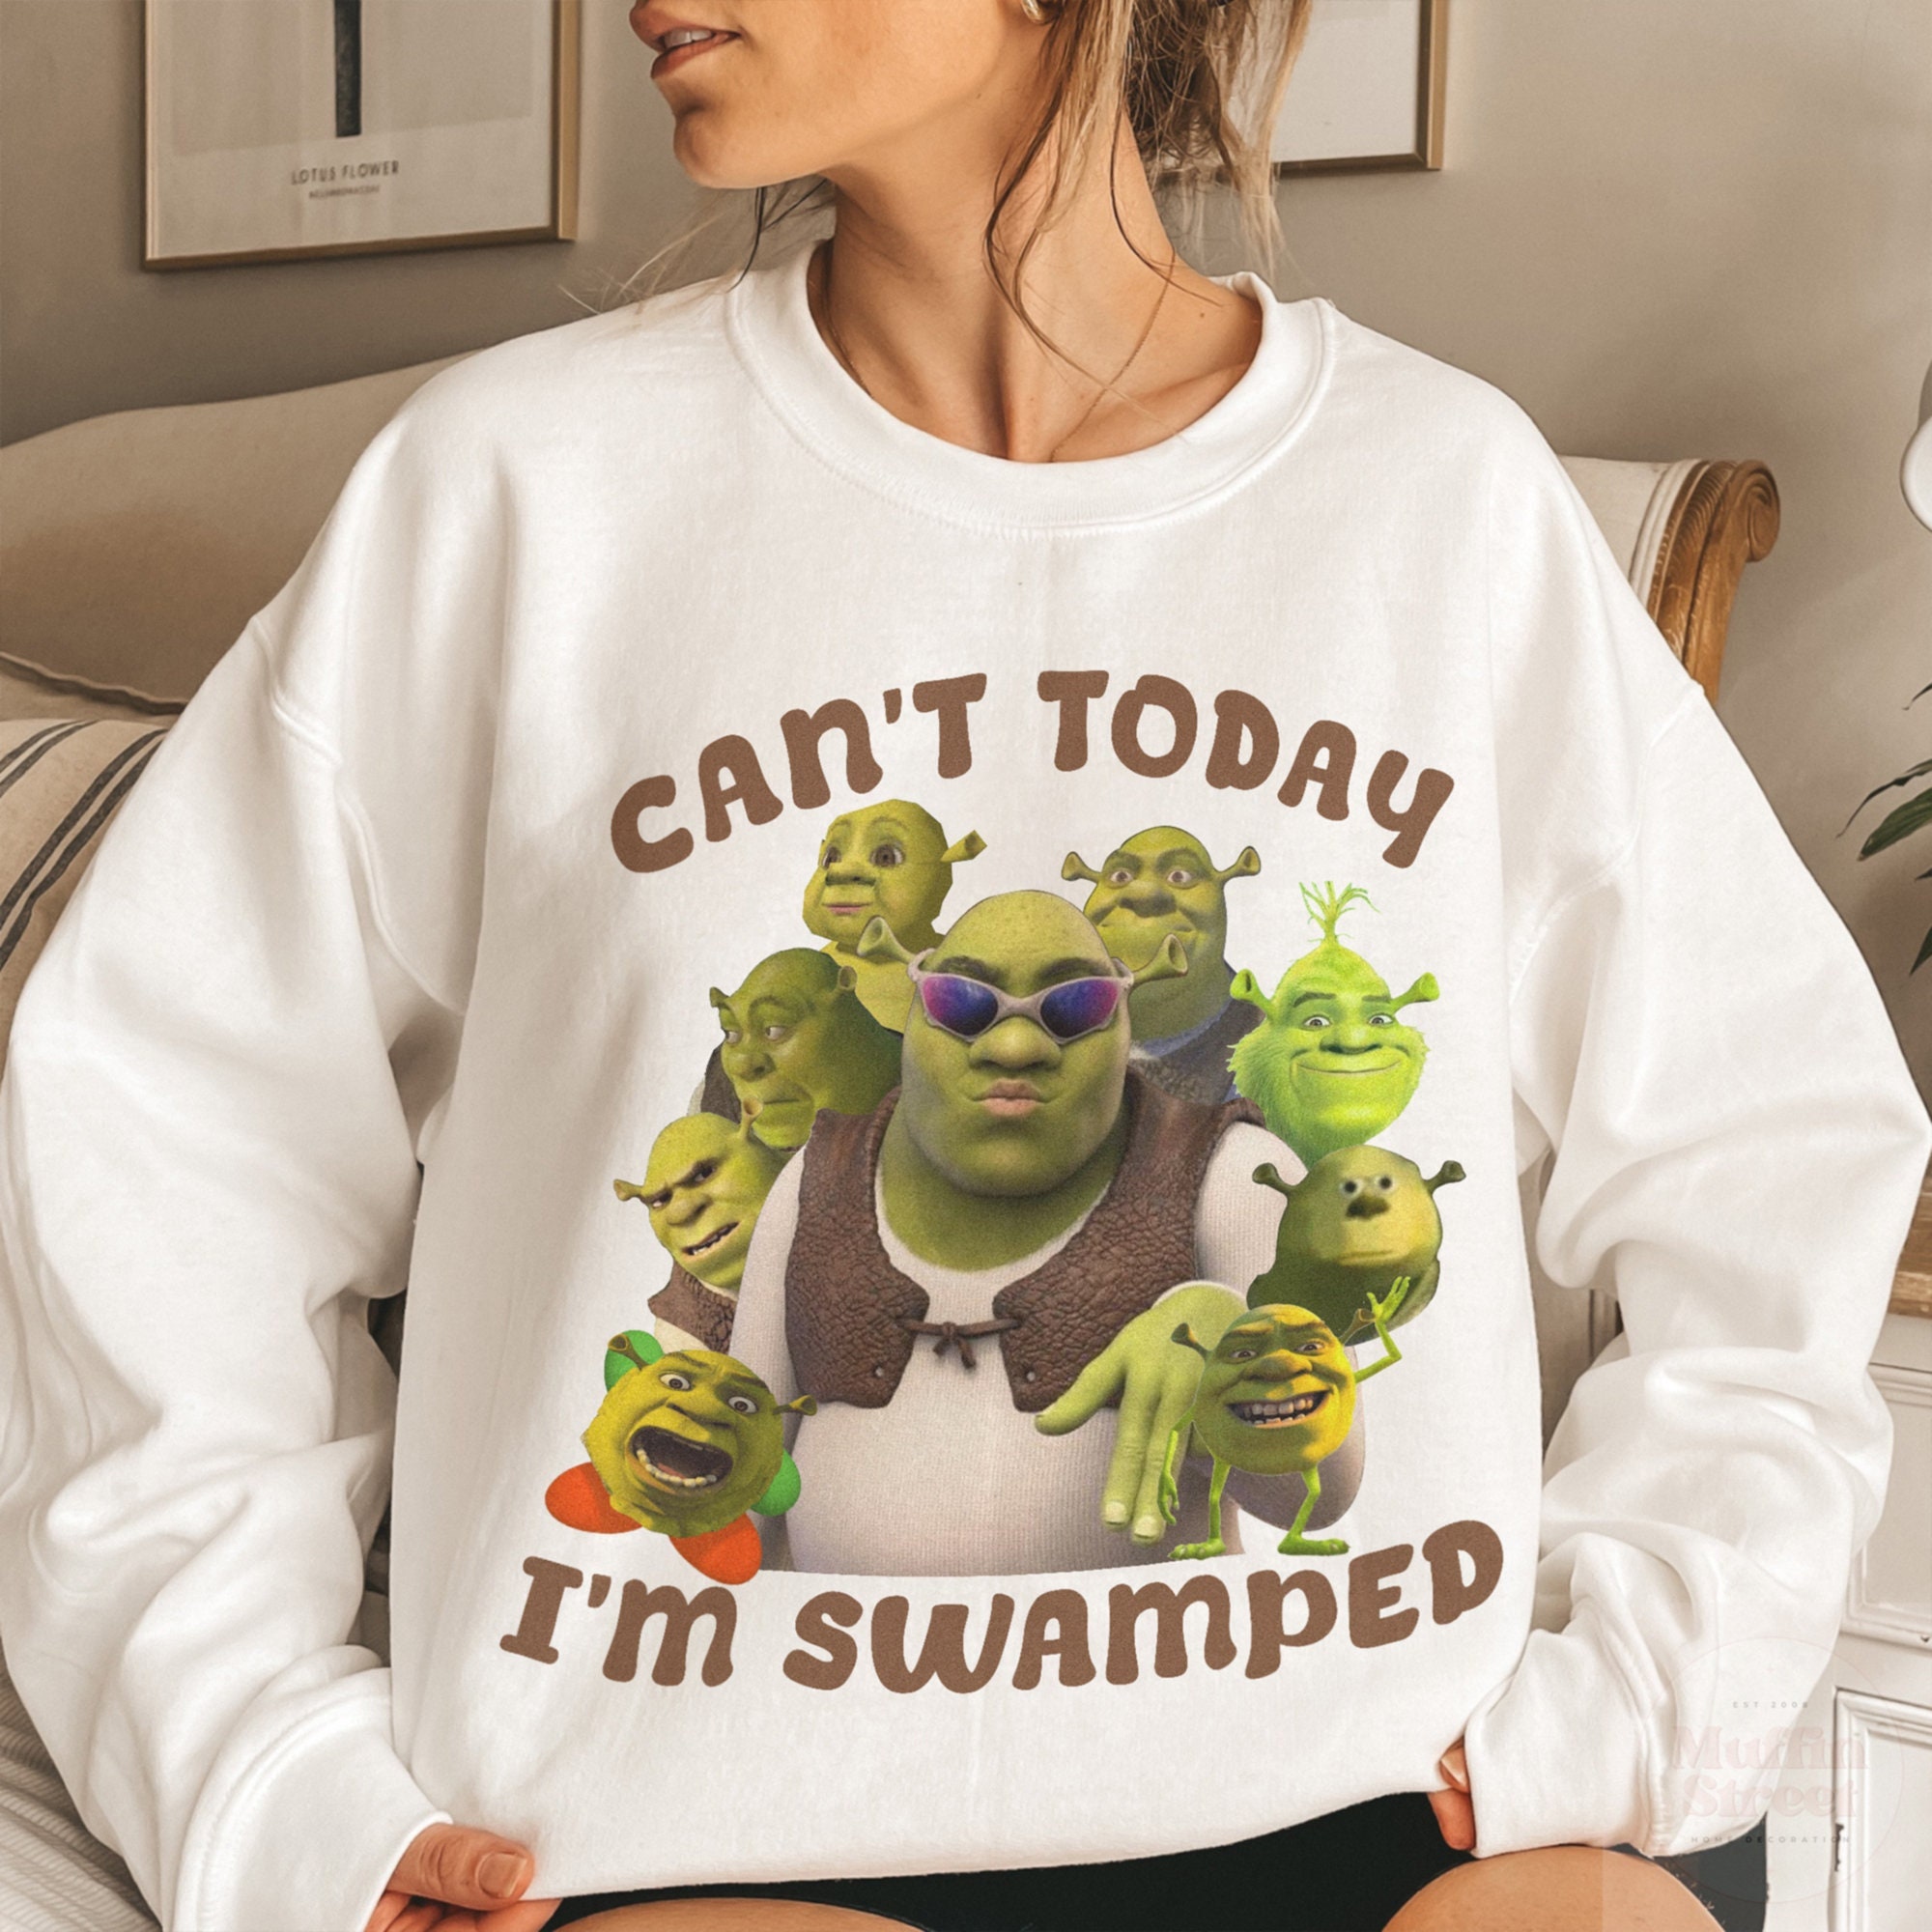 Shrek Face Meme Essential T-Shirt for Sale by mylifeasgaia